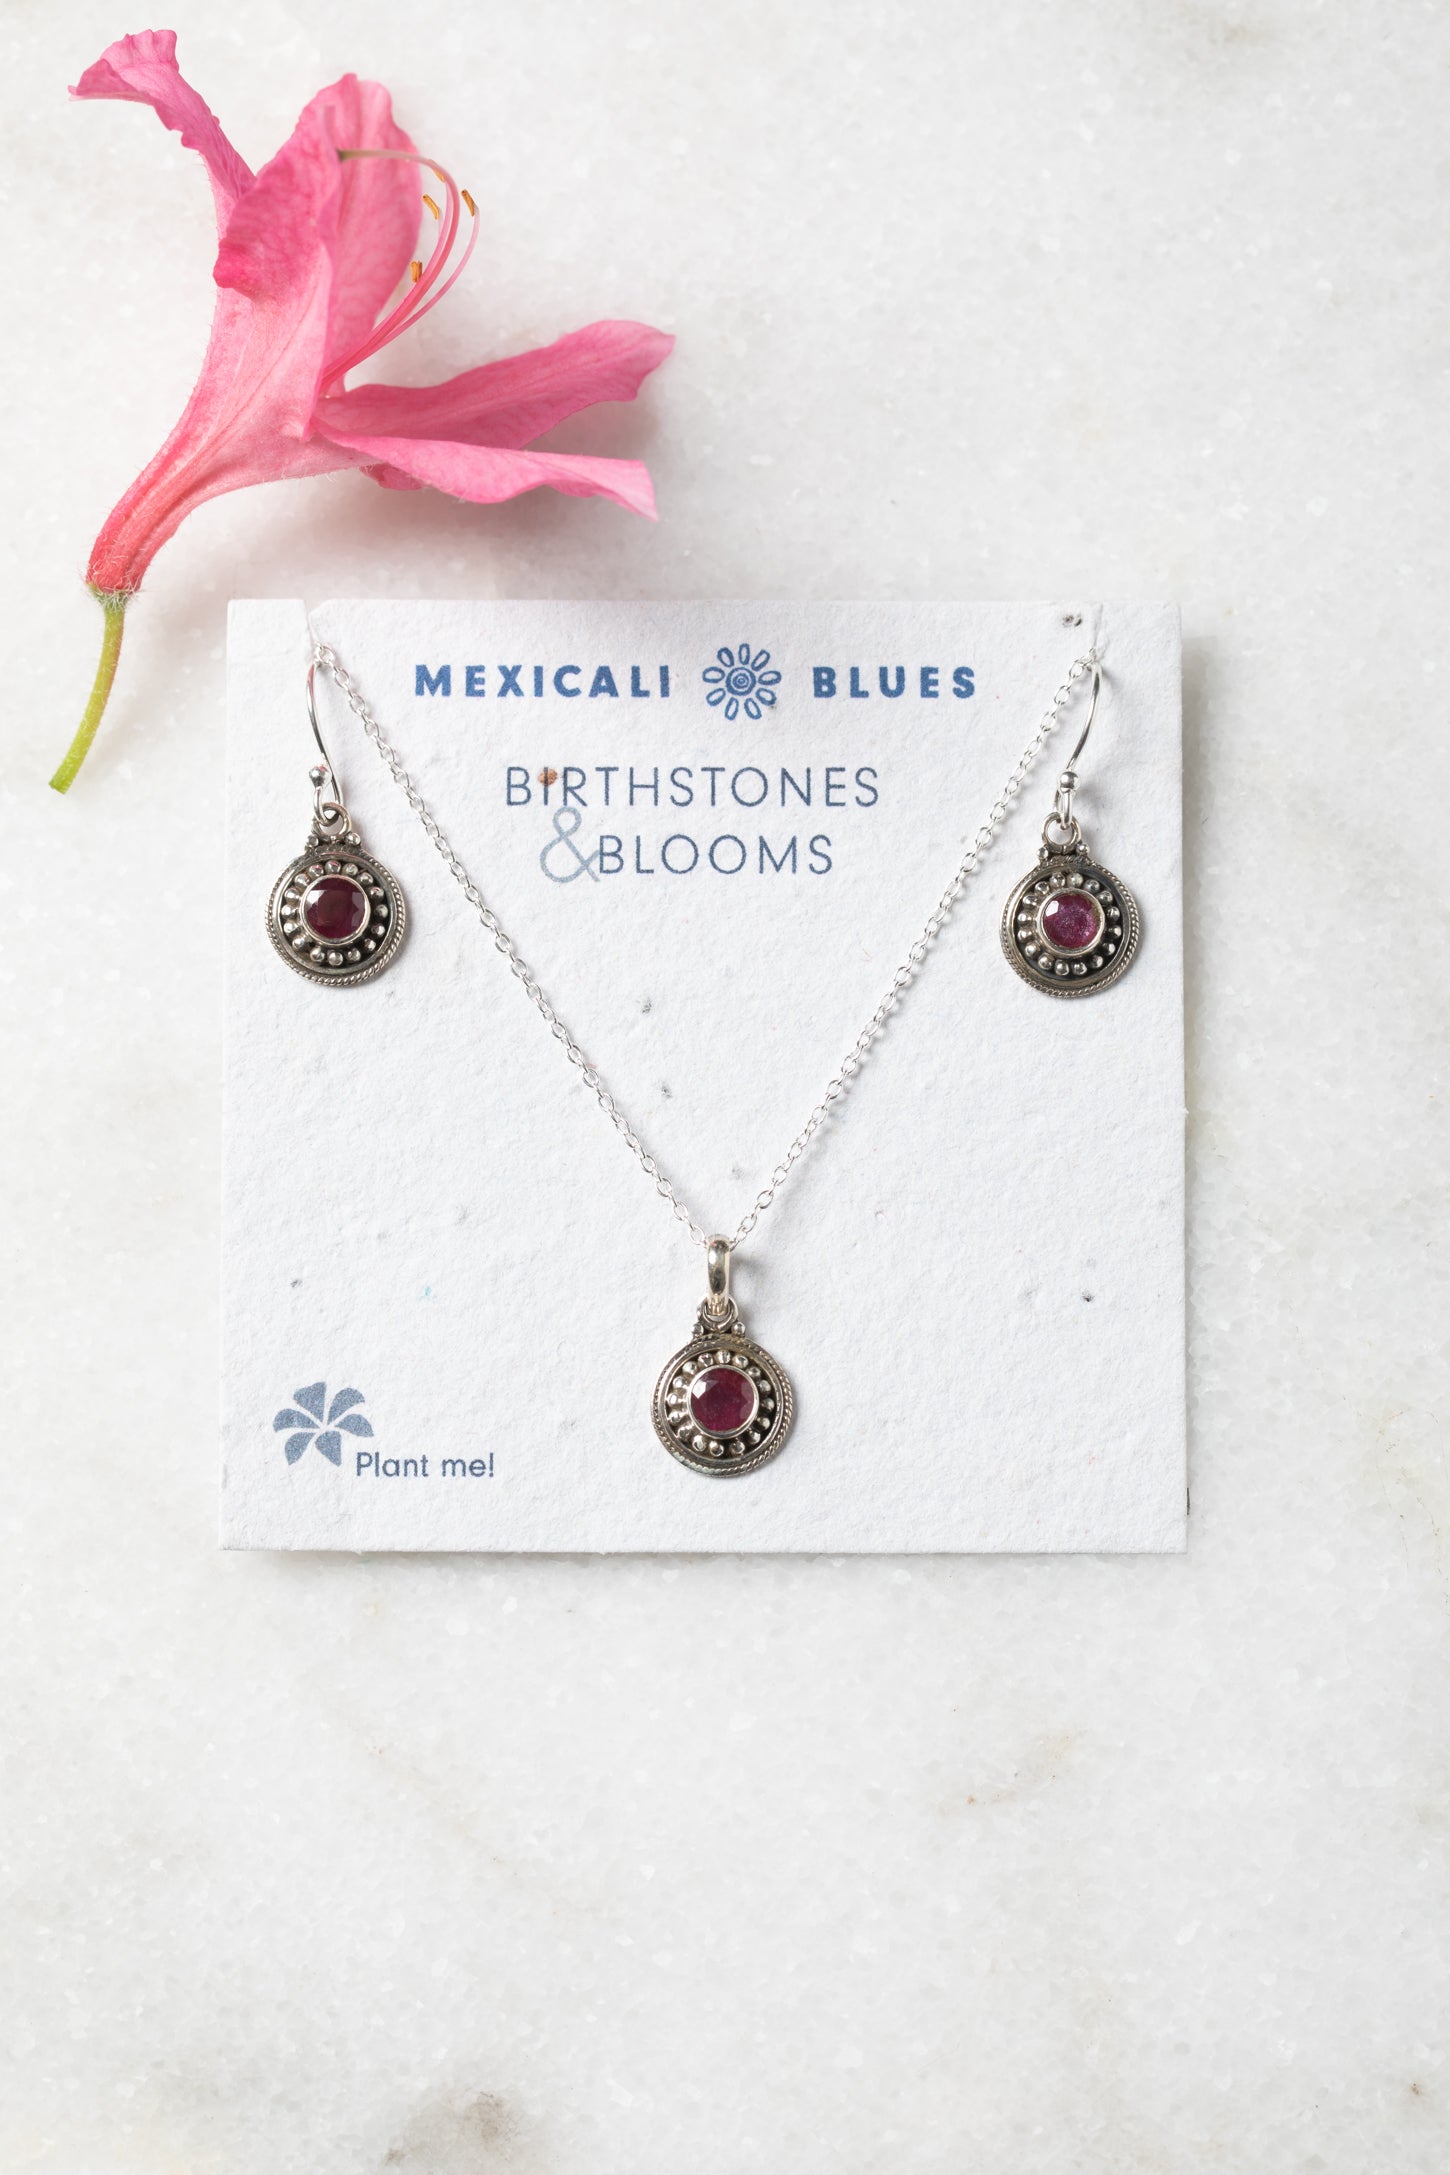 Birthstones and Blooms Gemstone Gift Set